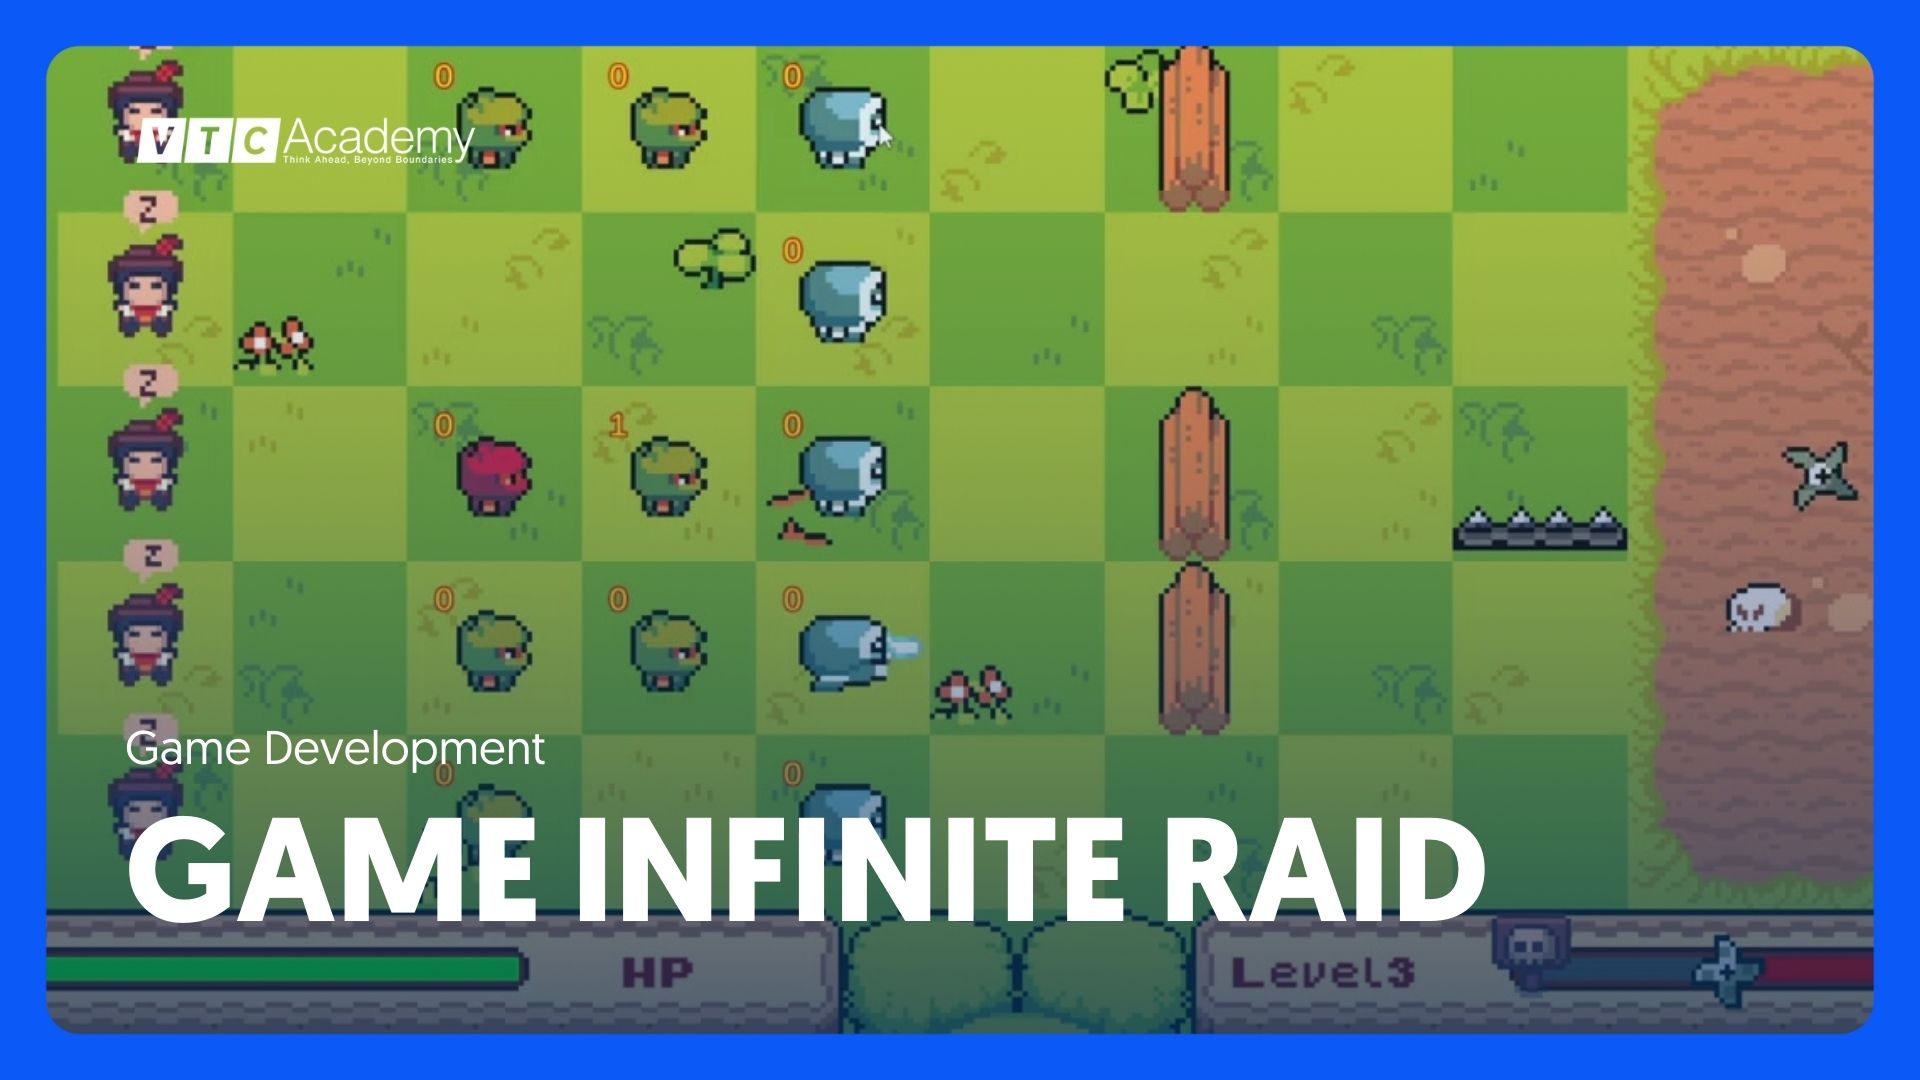 Infinite Raid